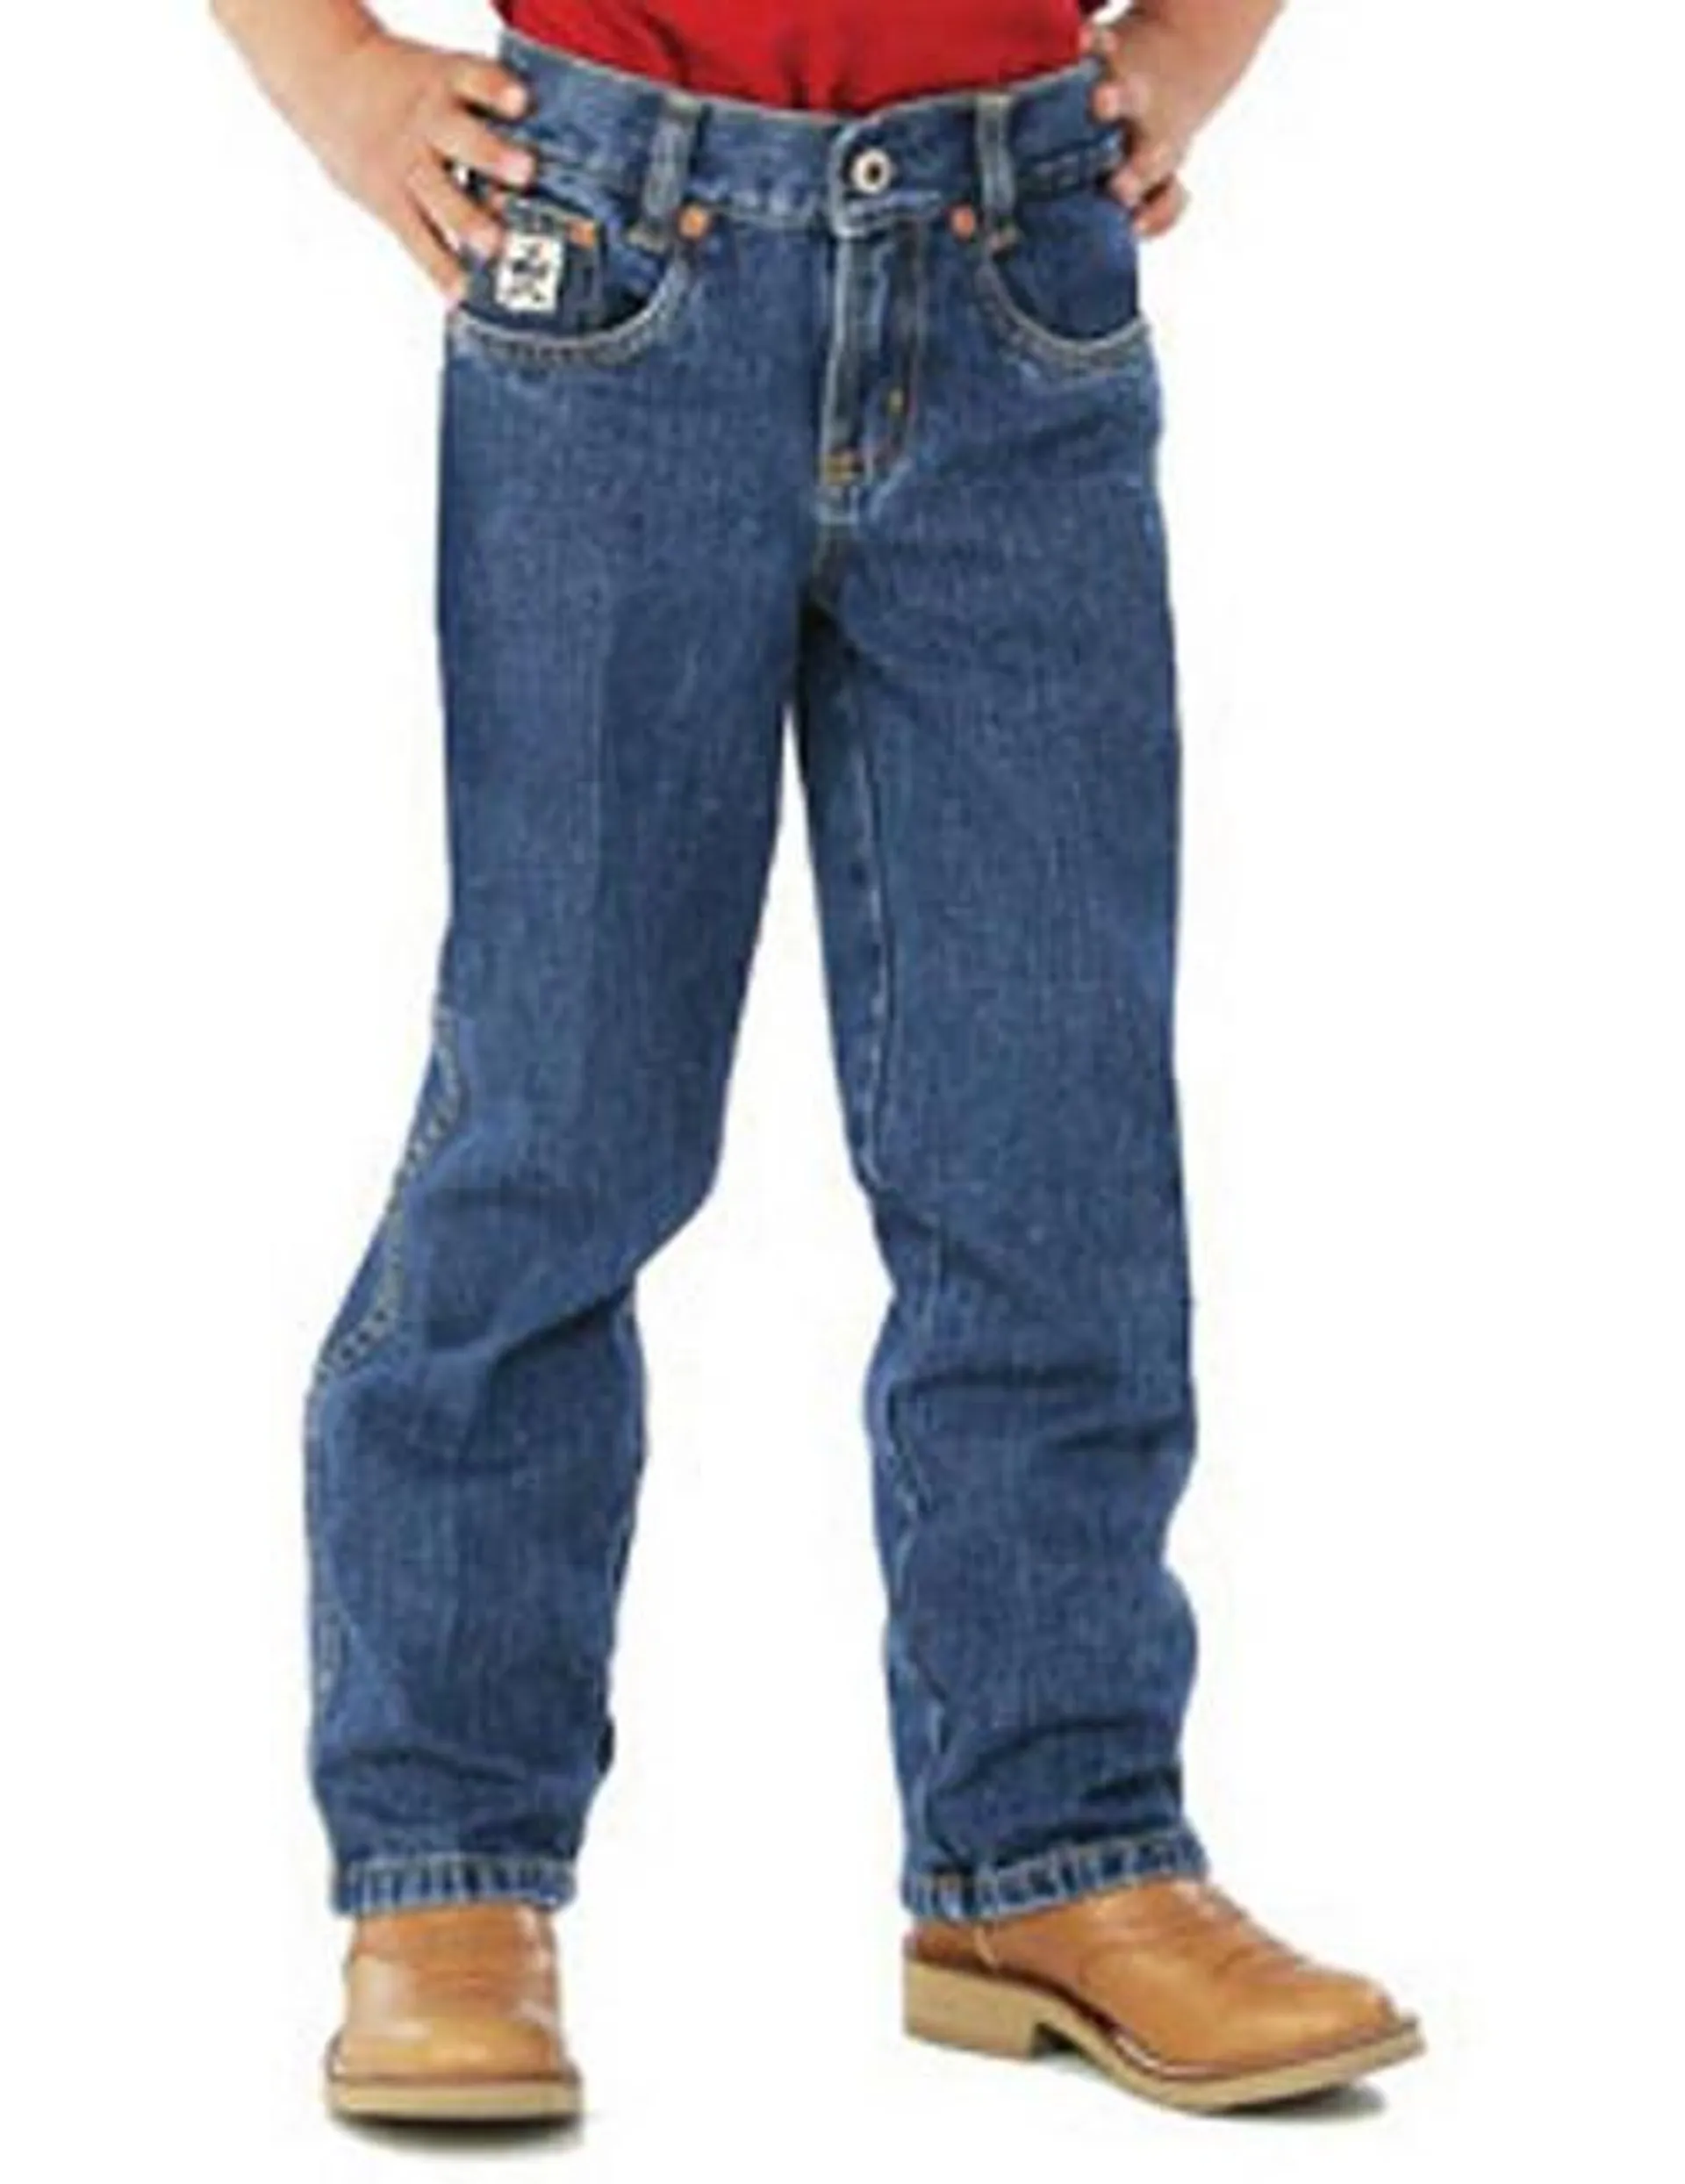 Cinch - Boys Adjustable Original Slim Fit Jeans - Denim